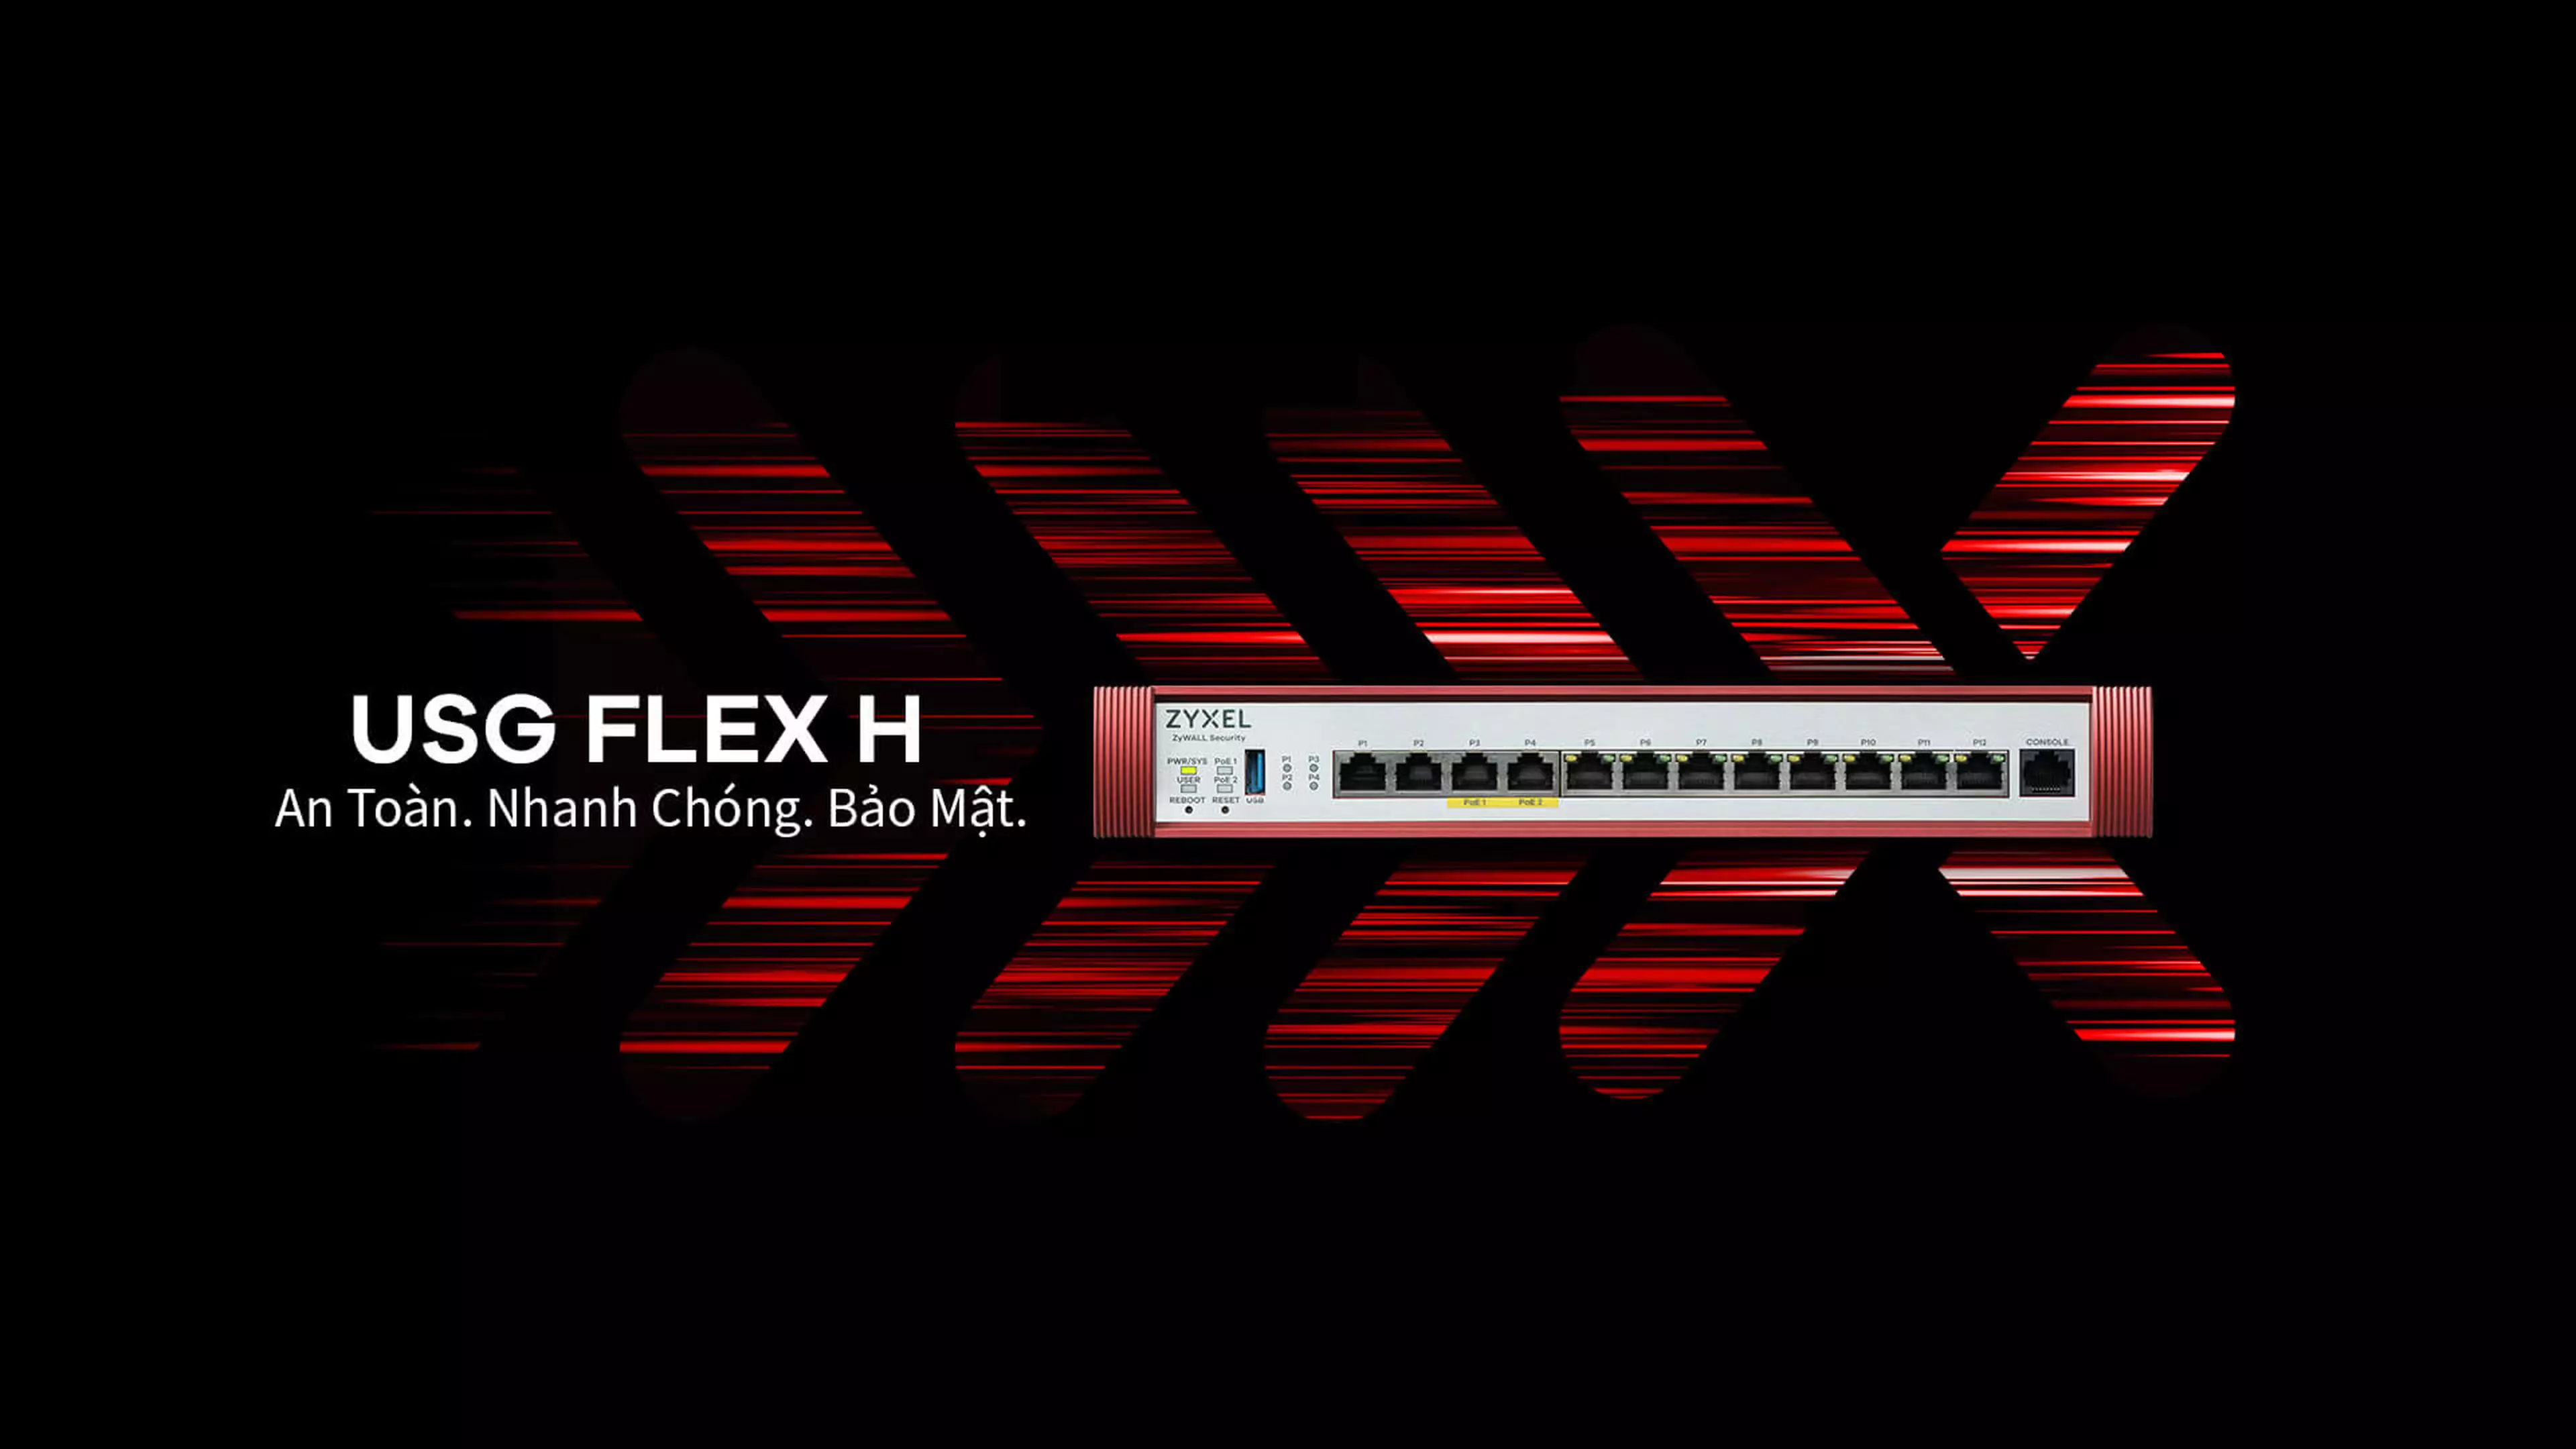 Security Firewall - USG FLEX H